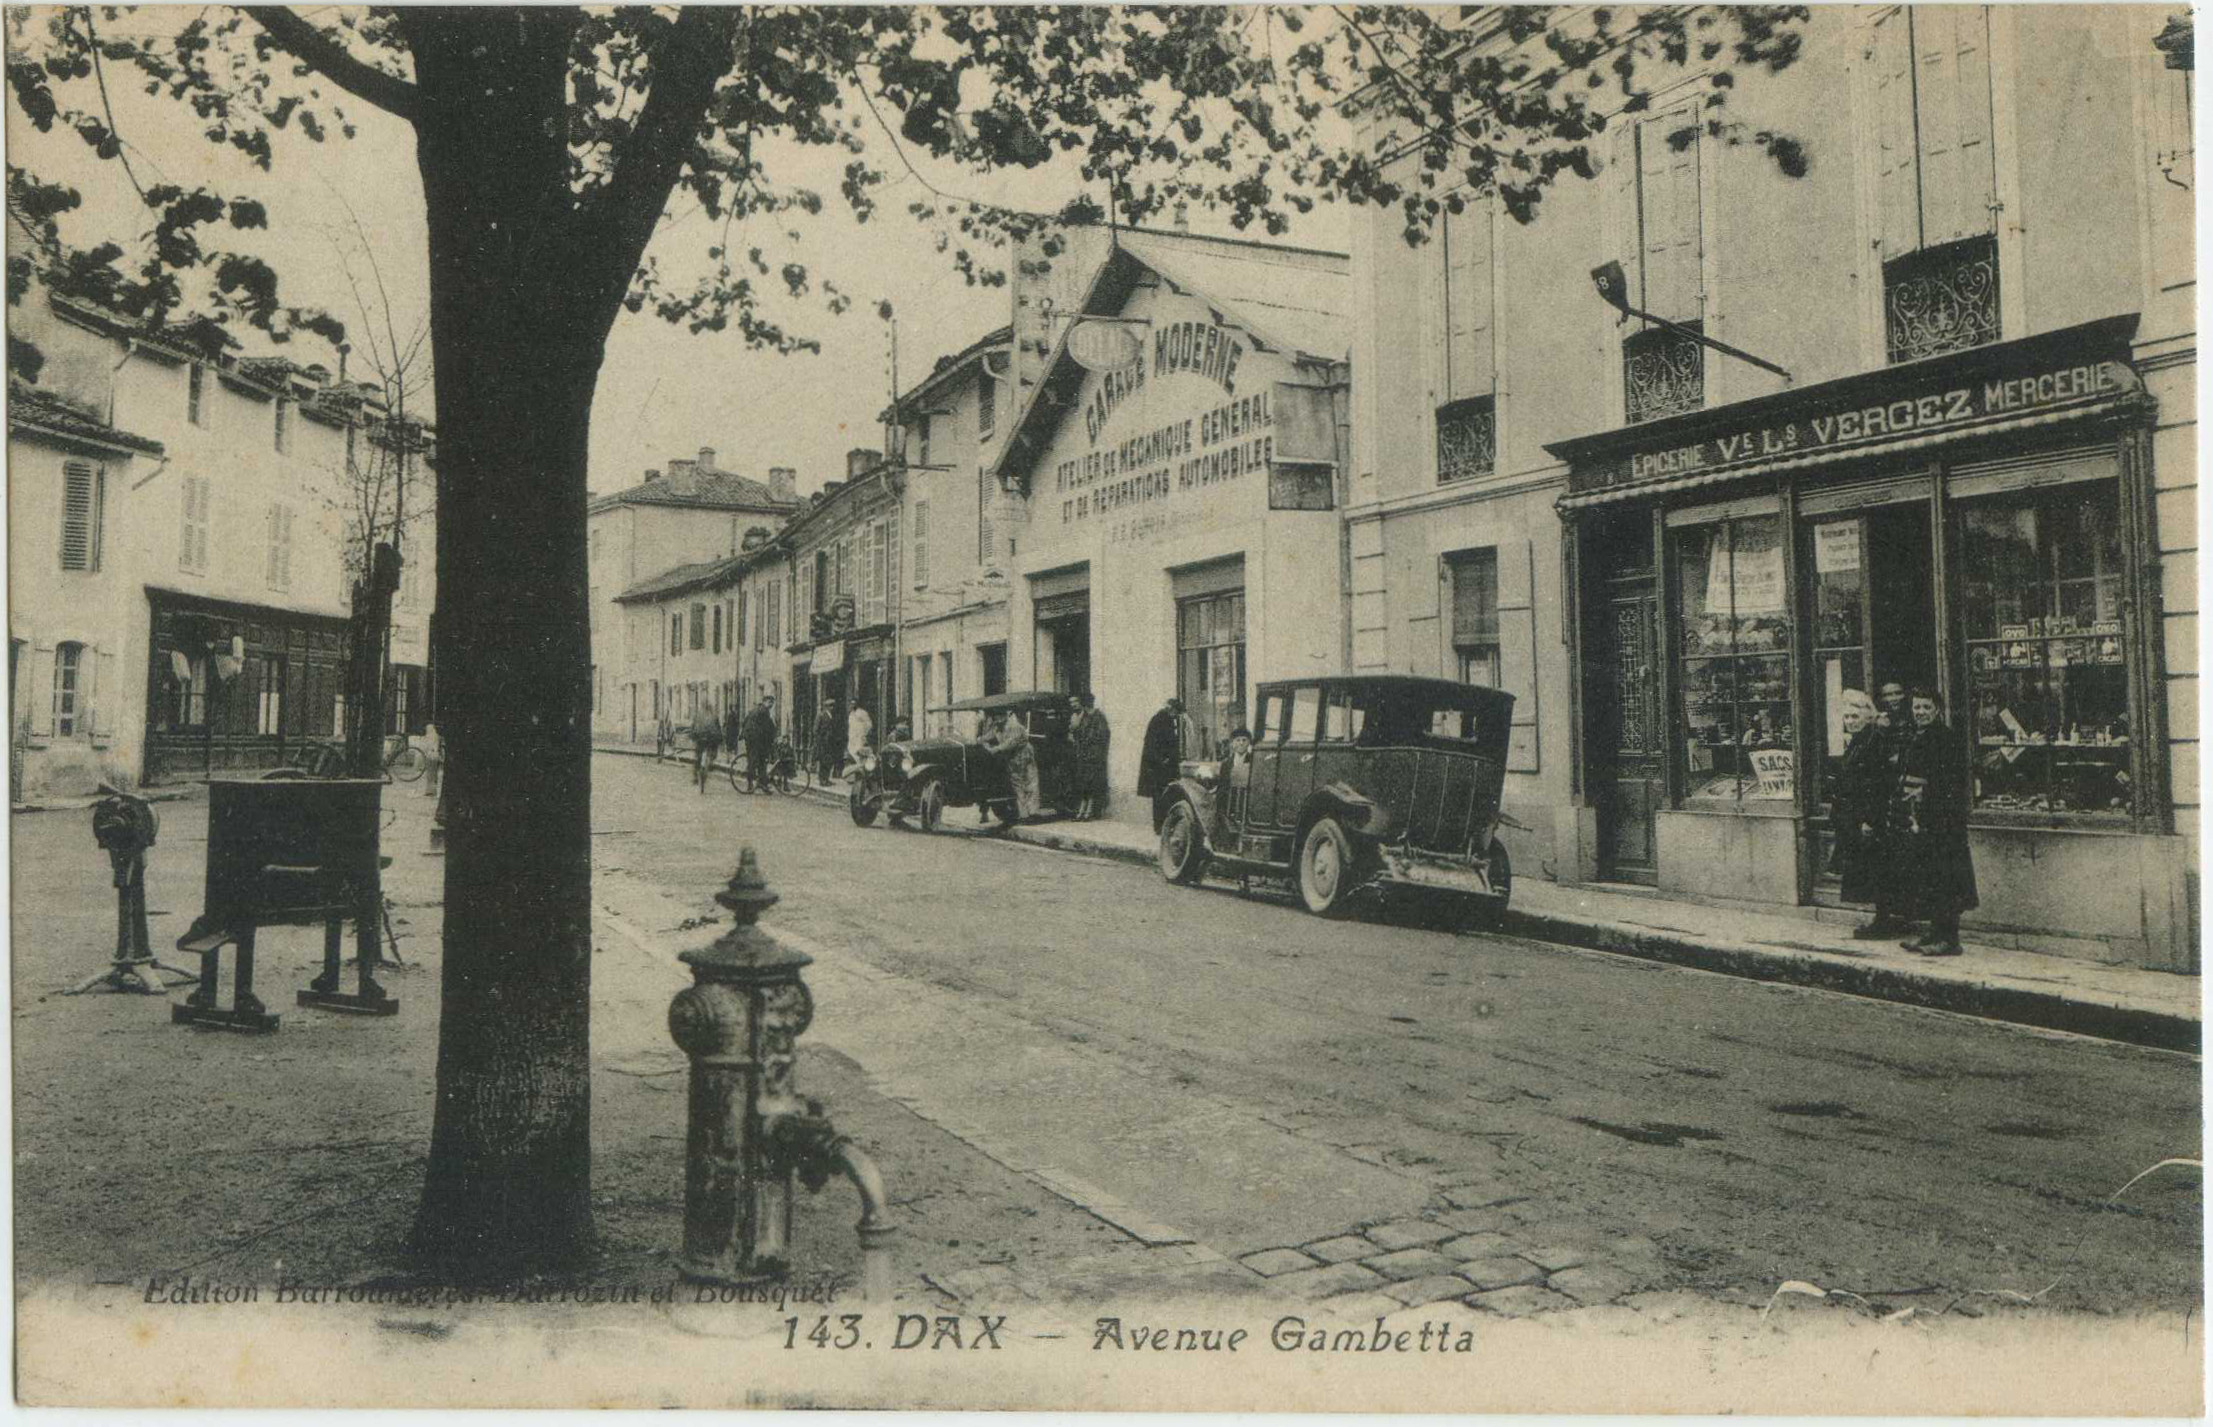 Dax - Avenue Gambetta